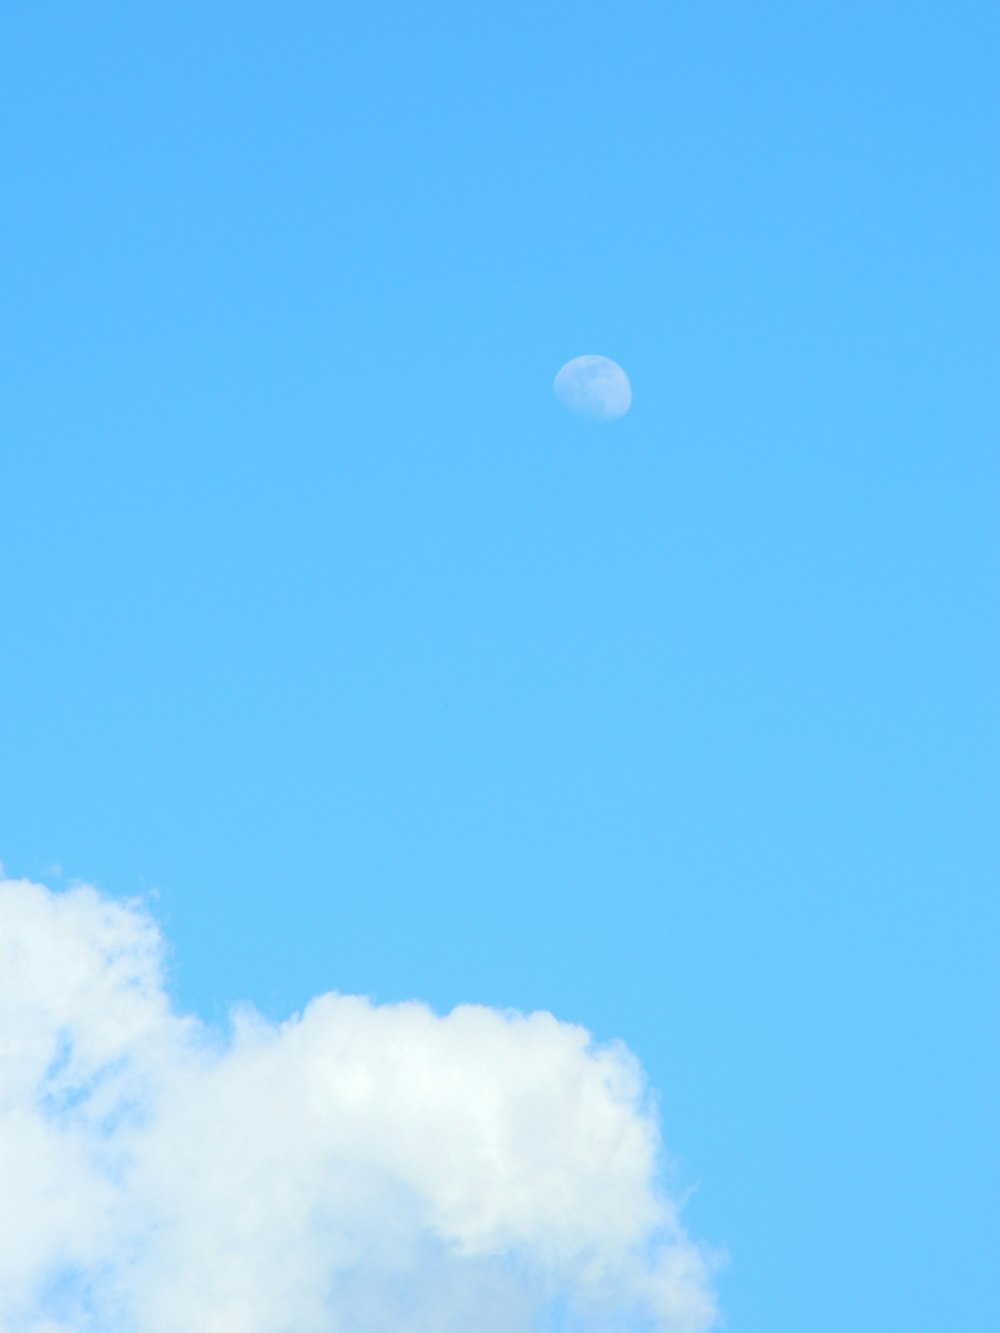 Un avión volando a través de un cielo azul con nubes